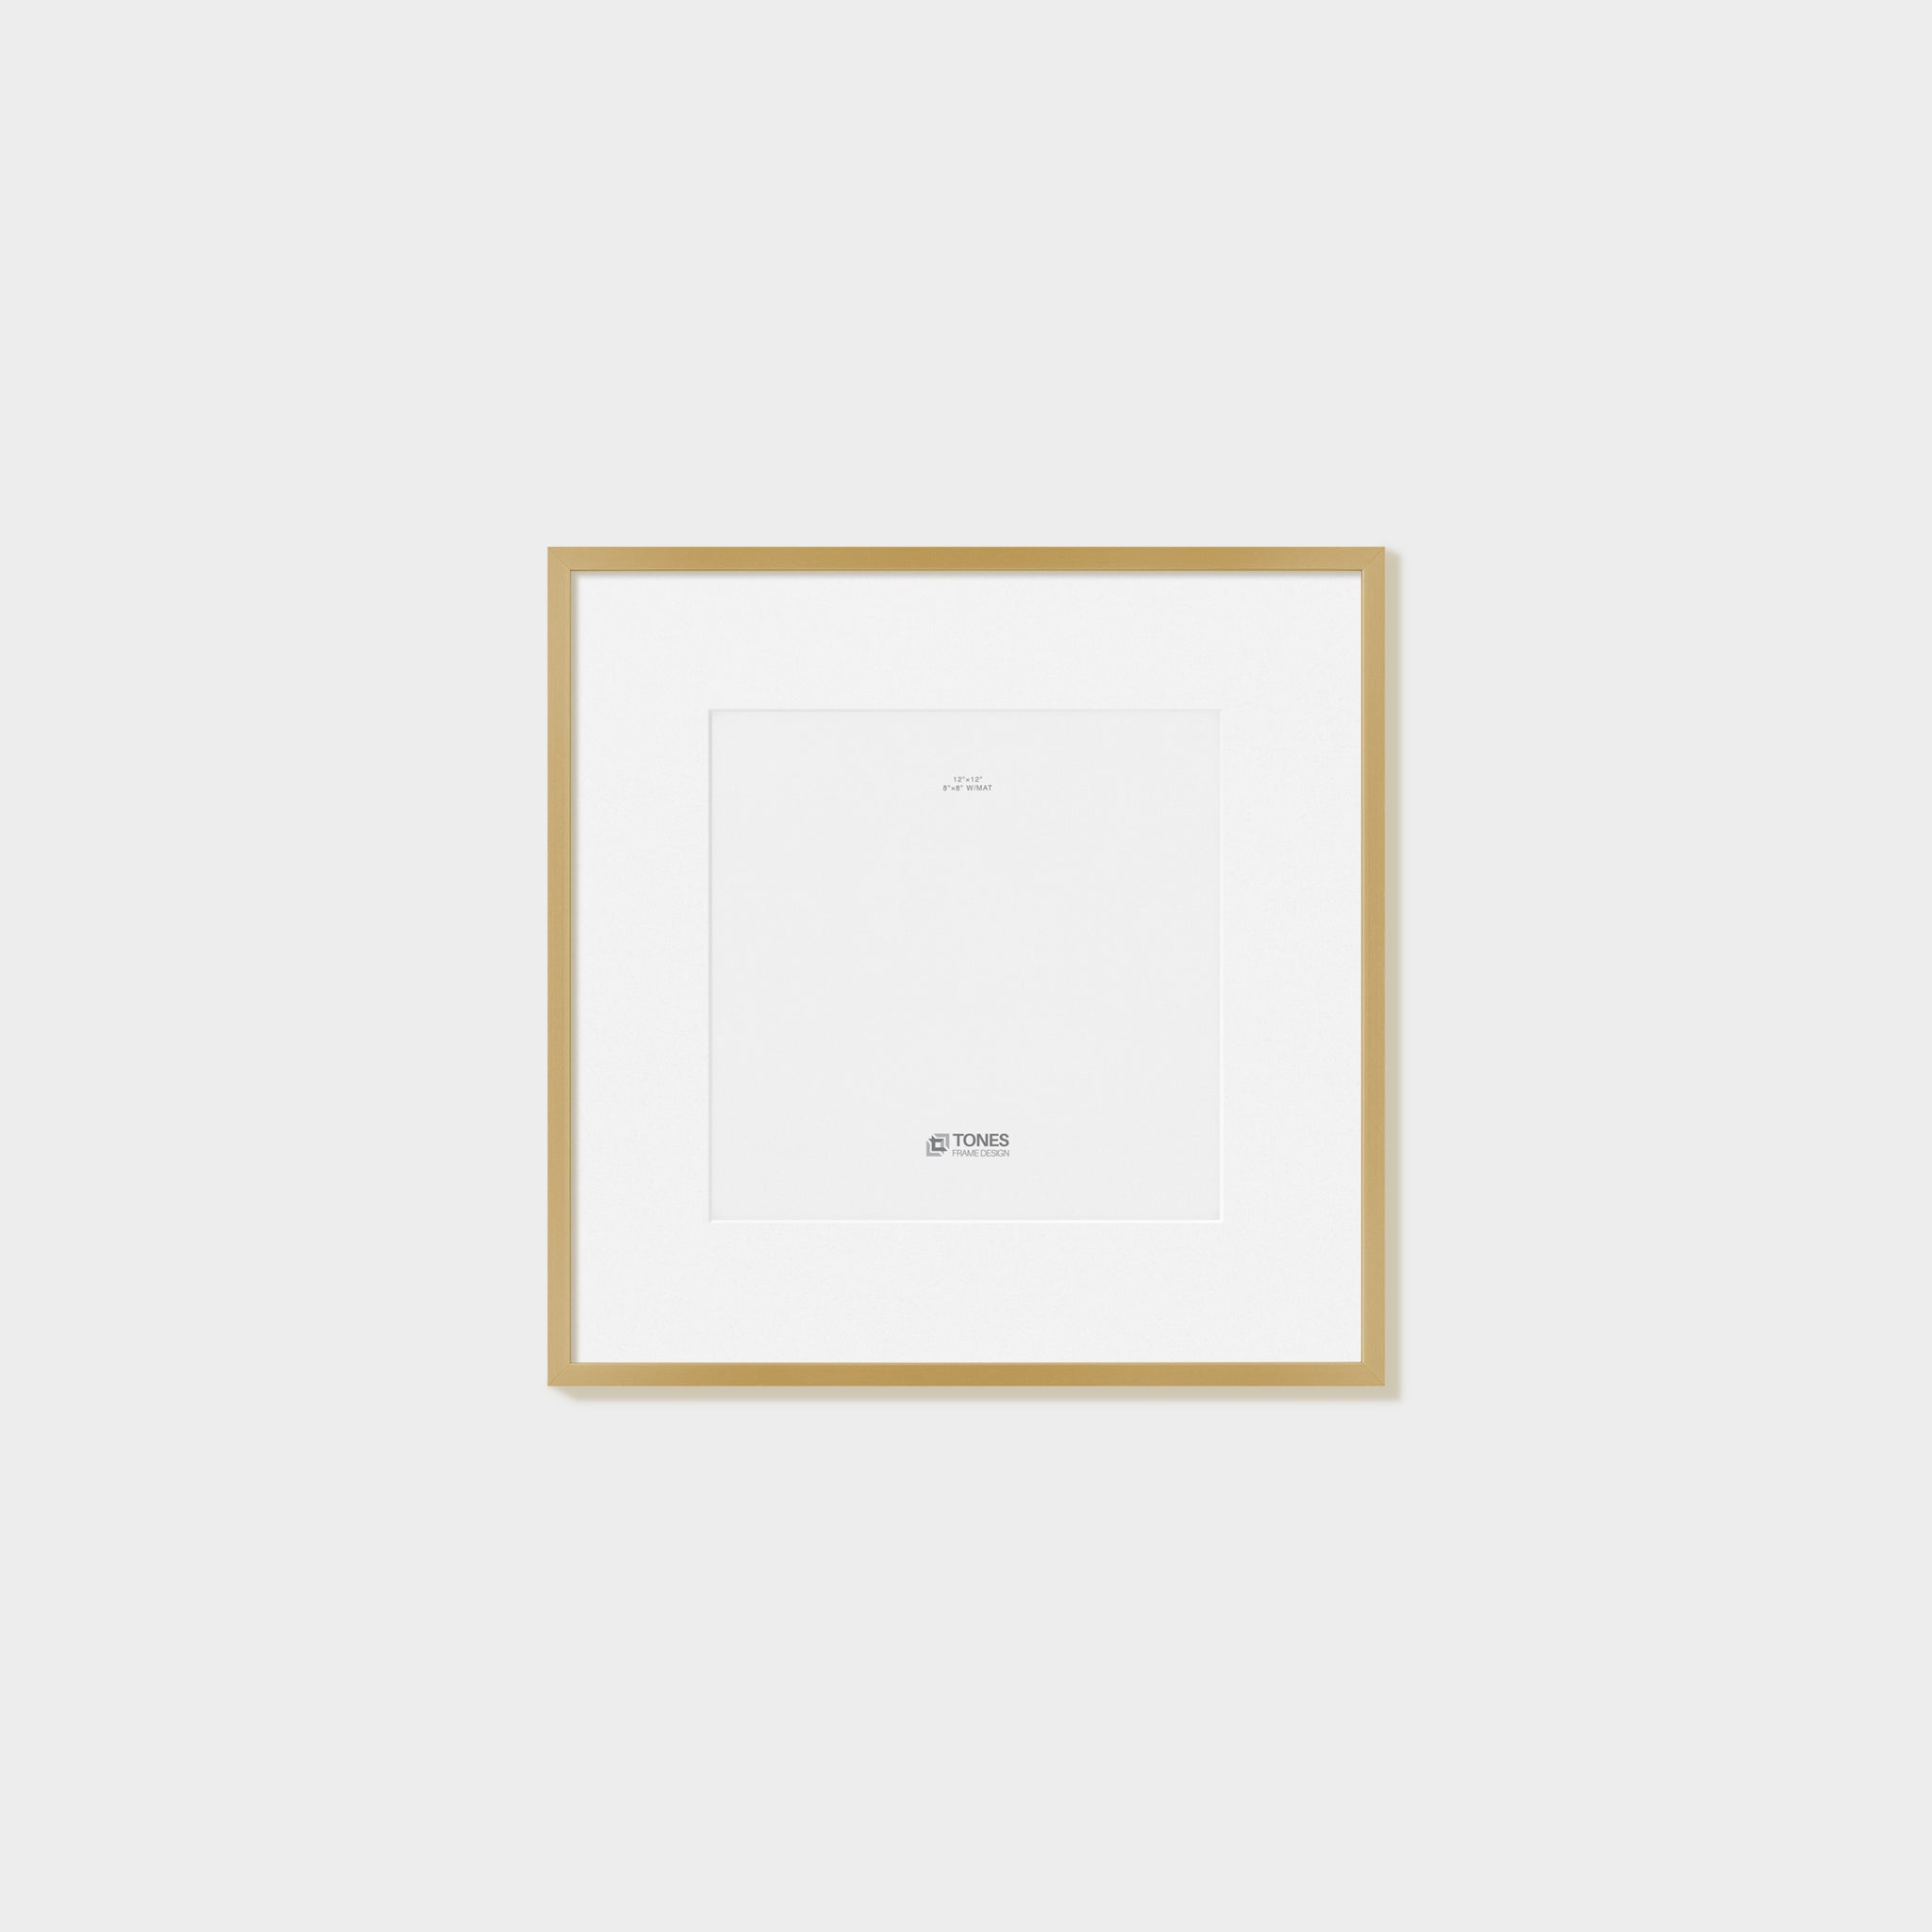 Tones Frame Design | Gold 12'' x 12'' Square Metal Picture Frame